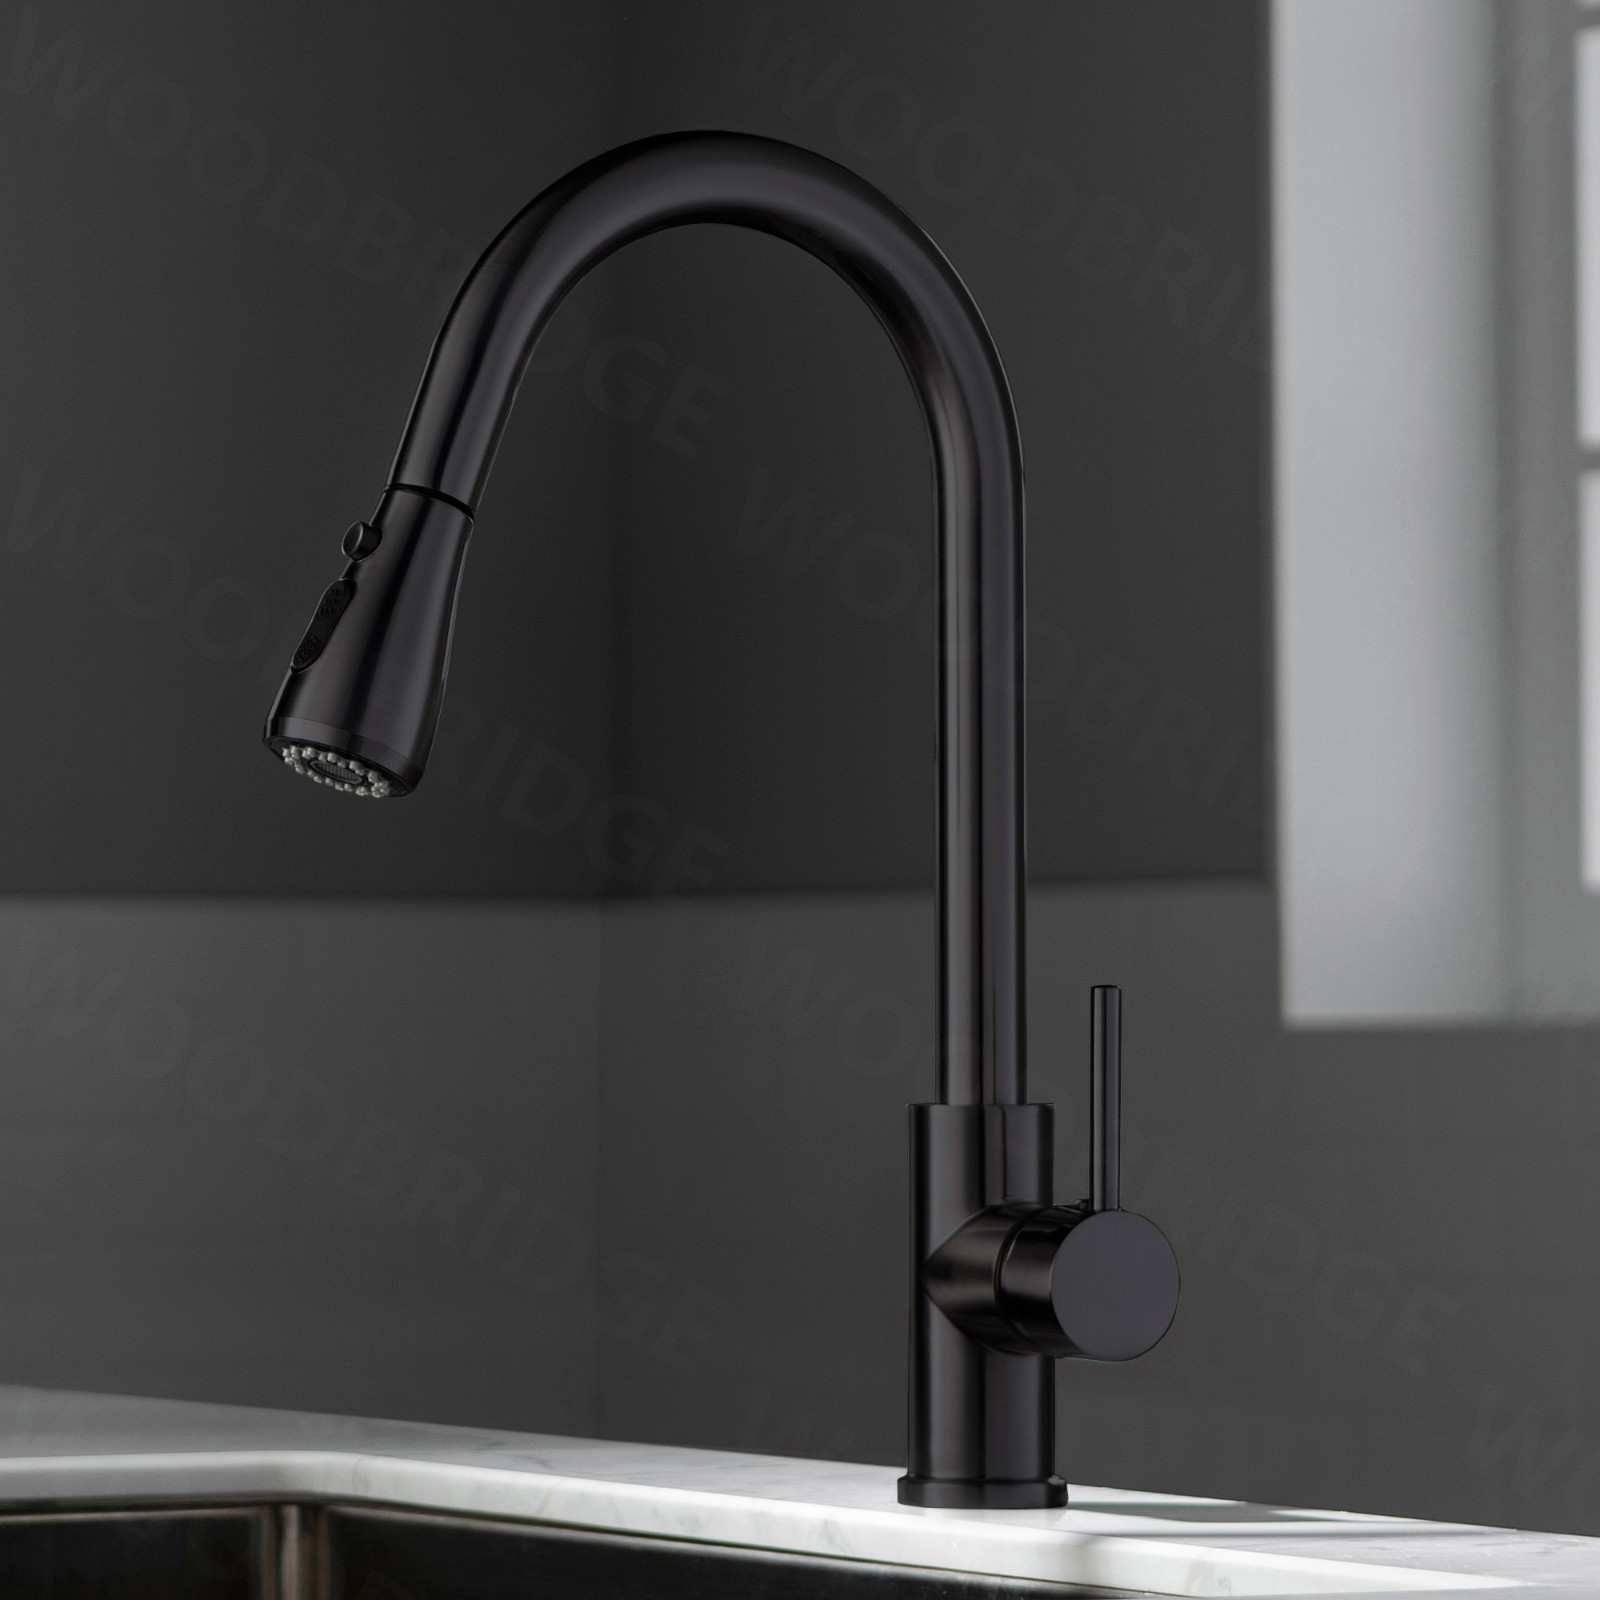  WOODBRIDGE WK090802BL Single Handle Pull Down Kitchen Faucet in Matte Black Finish._5004